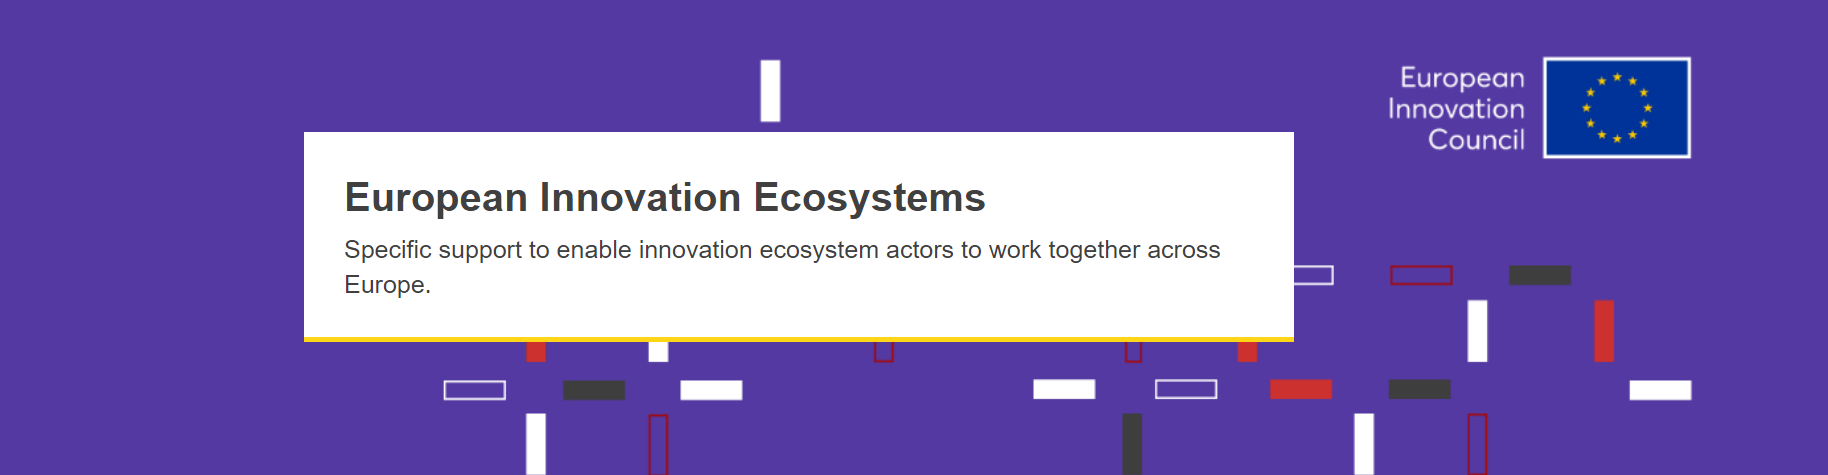 European Innovation Ecosystems Work Programme: Περισσότερα από 90 εκ. ευρώ διατίθενται μέσω των πρώτων προκηρύξεων του Προγράμματος